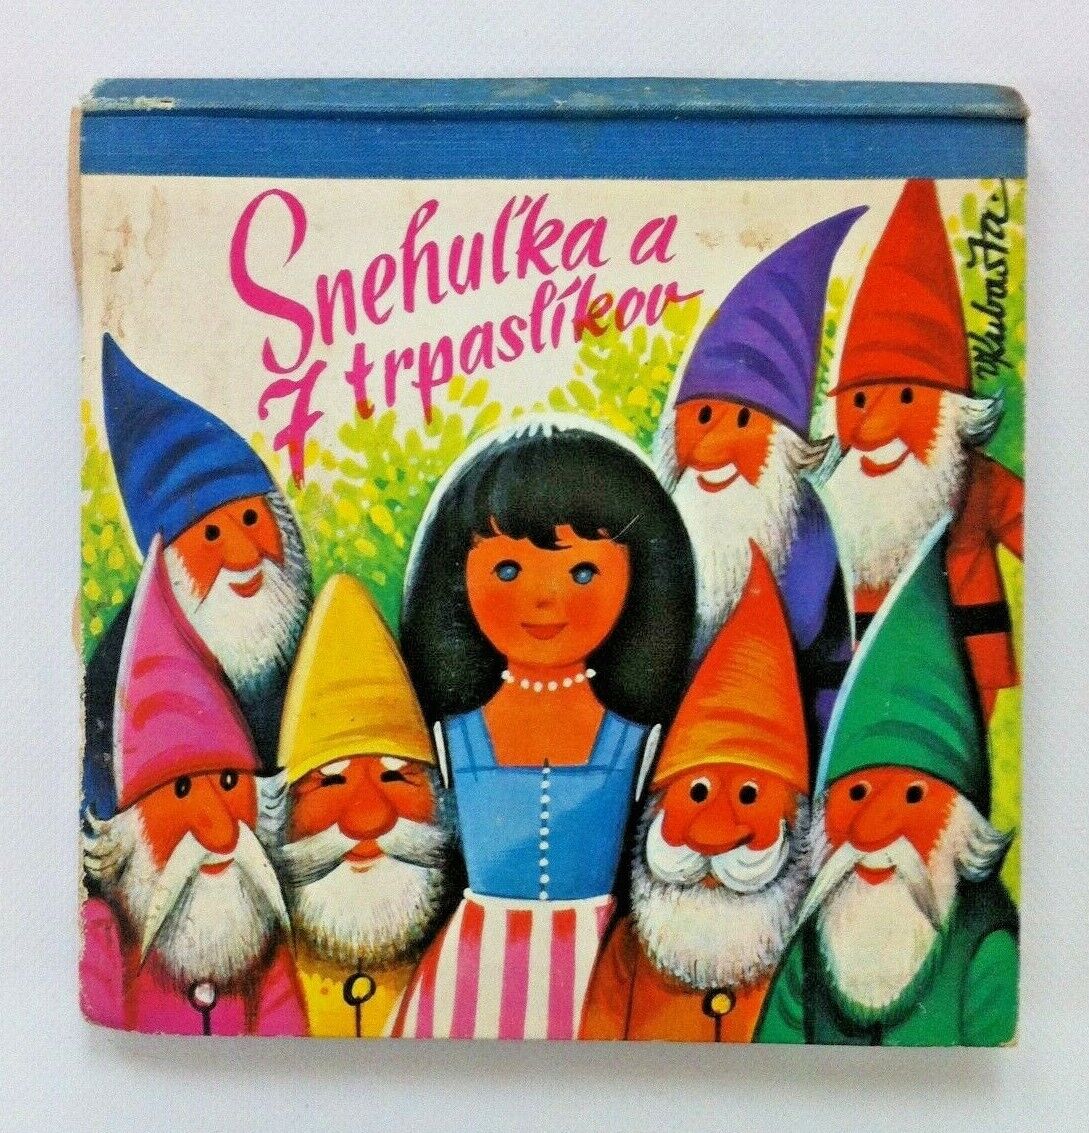 1970 Snow White 7 Dwarfs Snehul\'ka a 7 trpaslikov Children Czech Slovak book